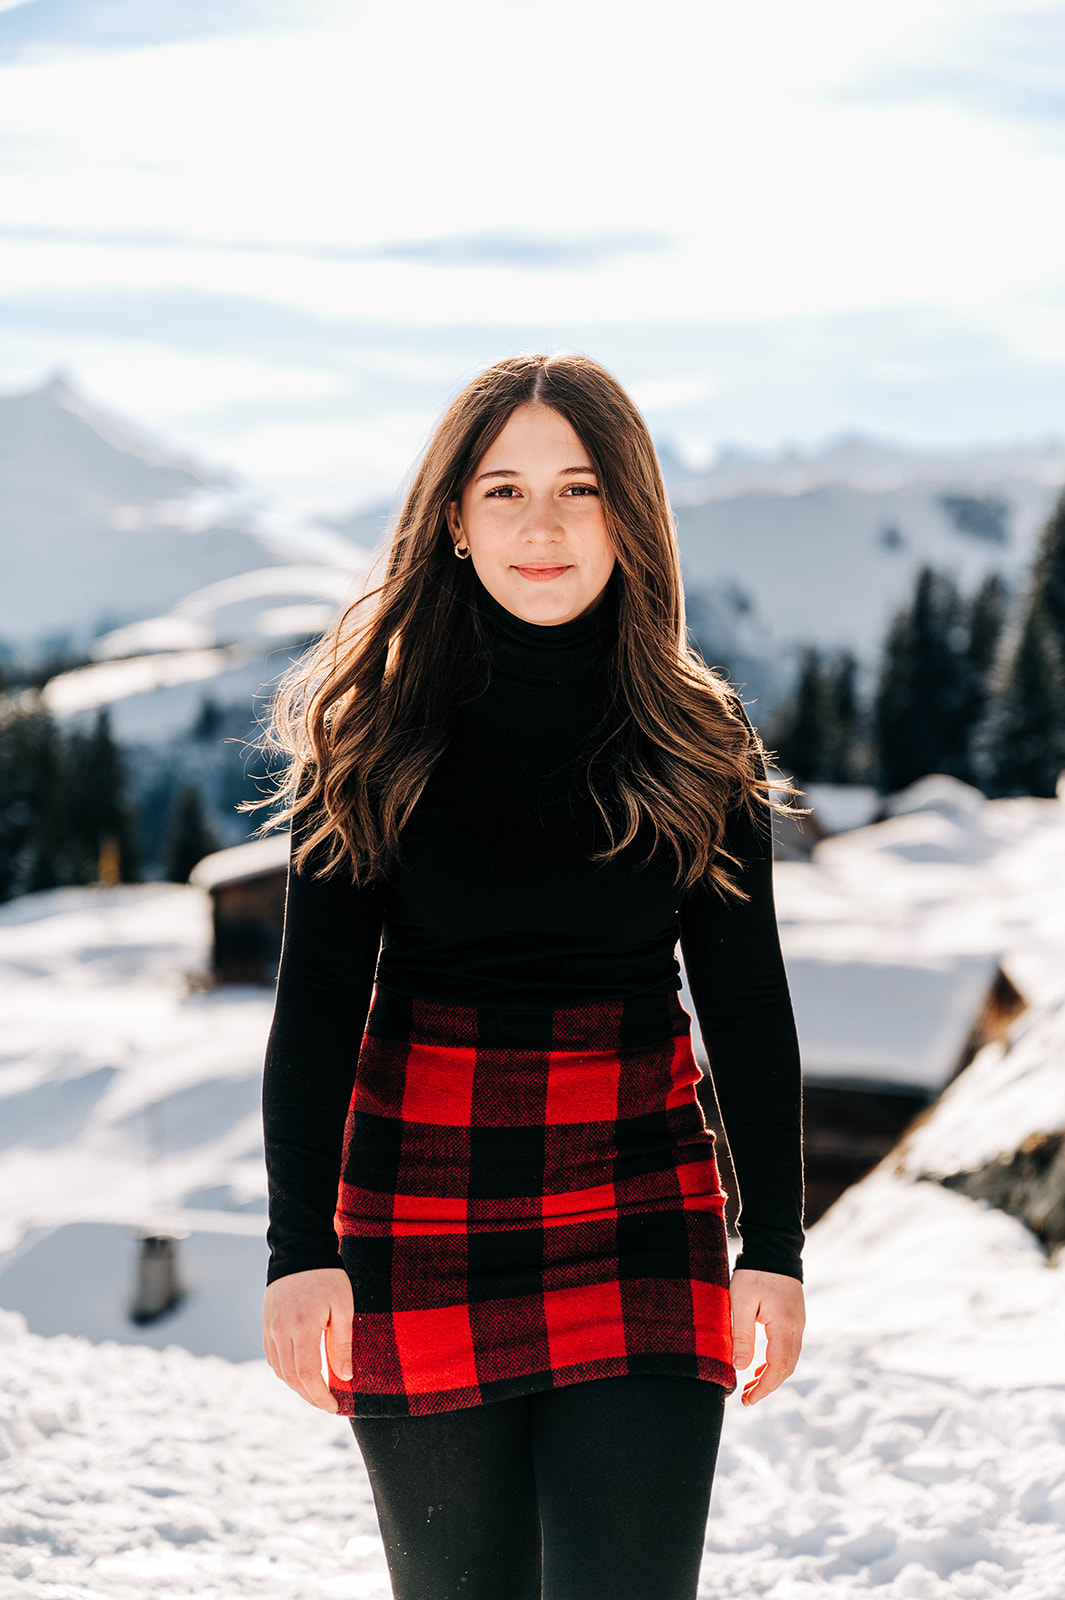 Swiss Alp Winter Snow Teenage Portraits